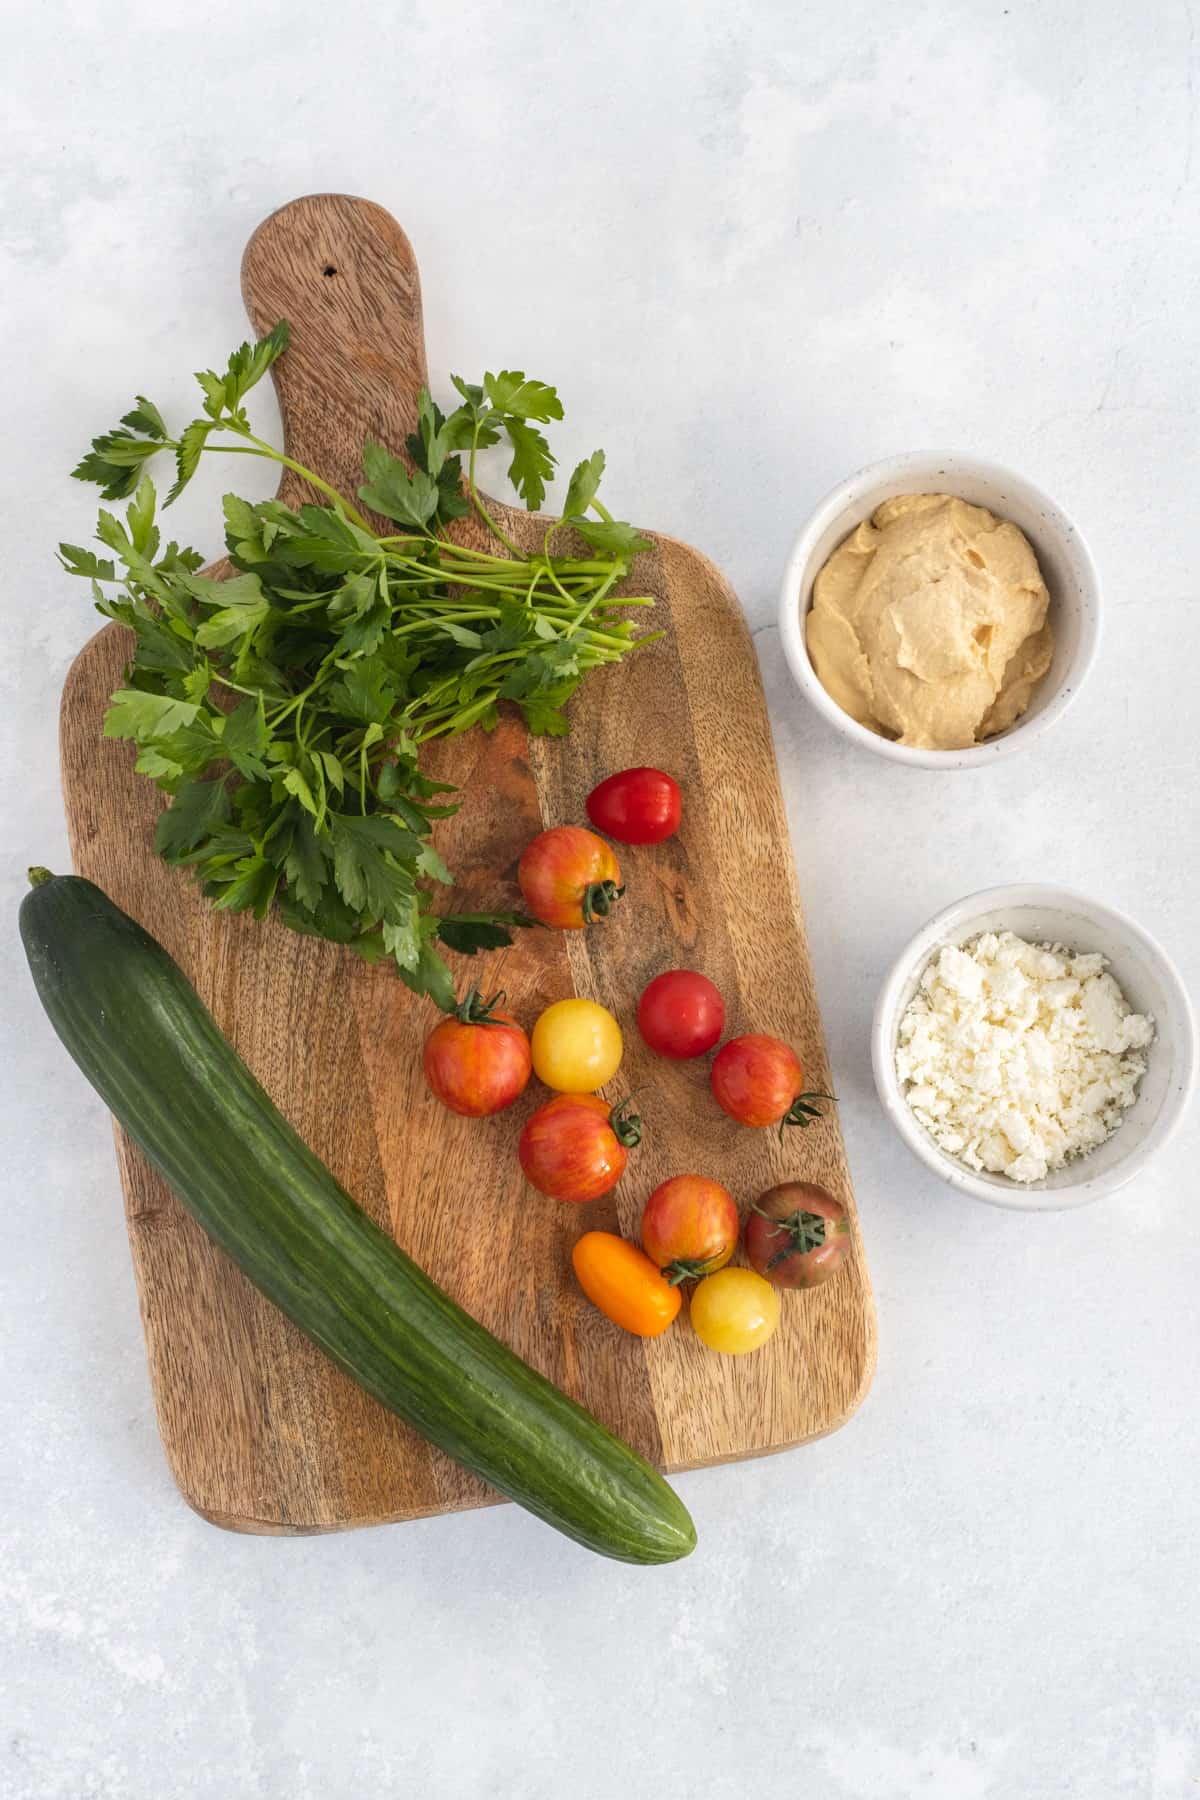 Ingredients for Cucumber Hummus Bites